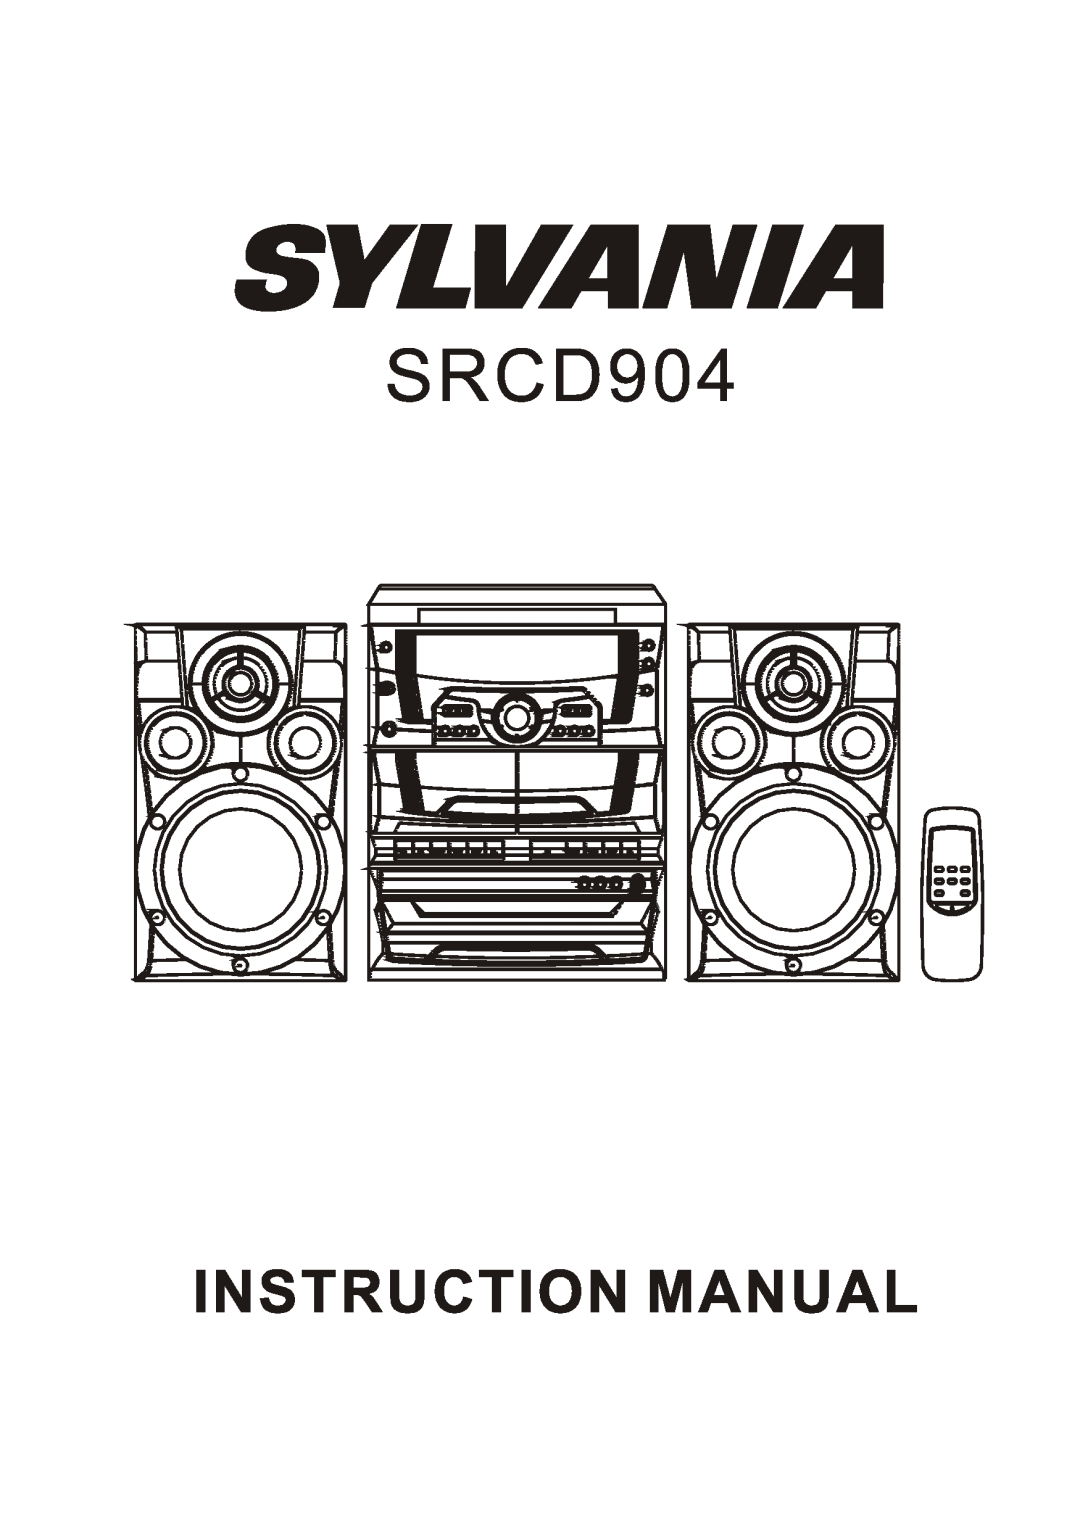 Sylvania SRCD904 manual 